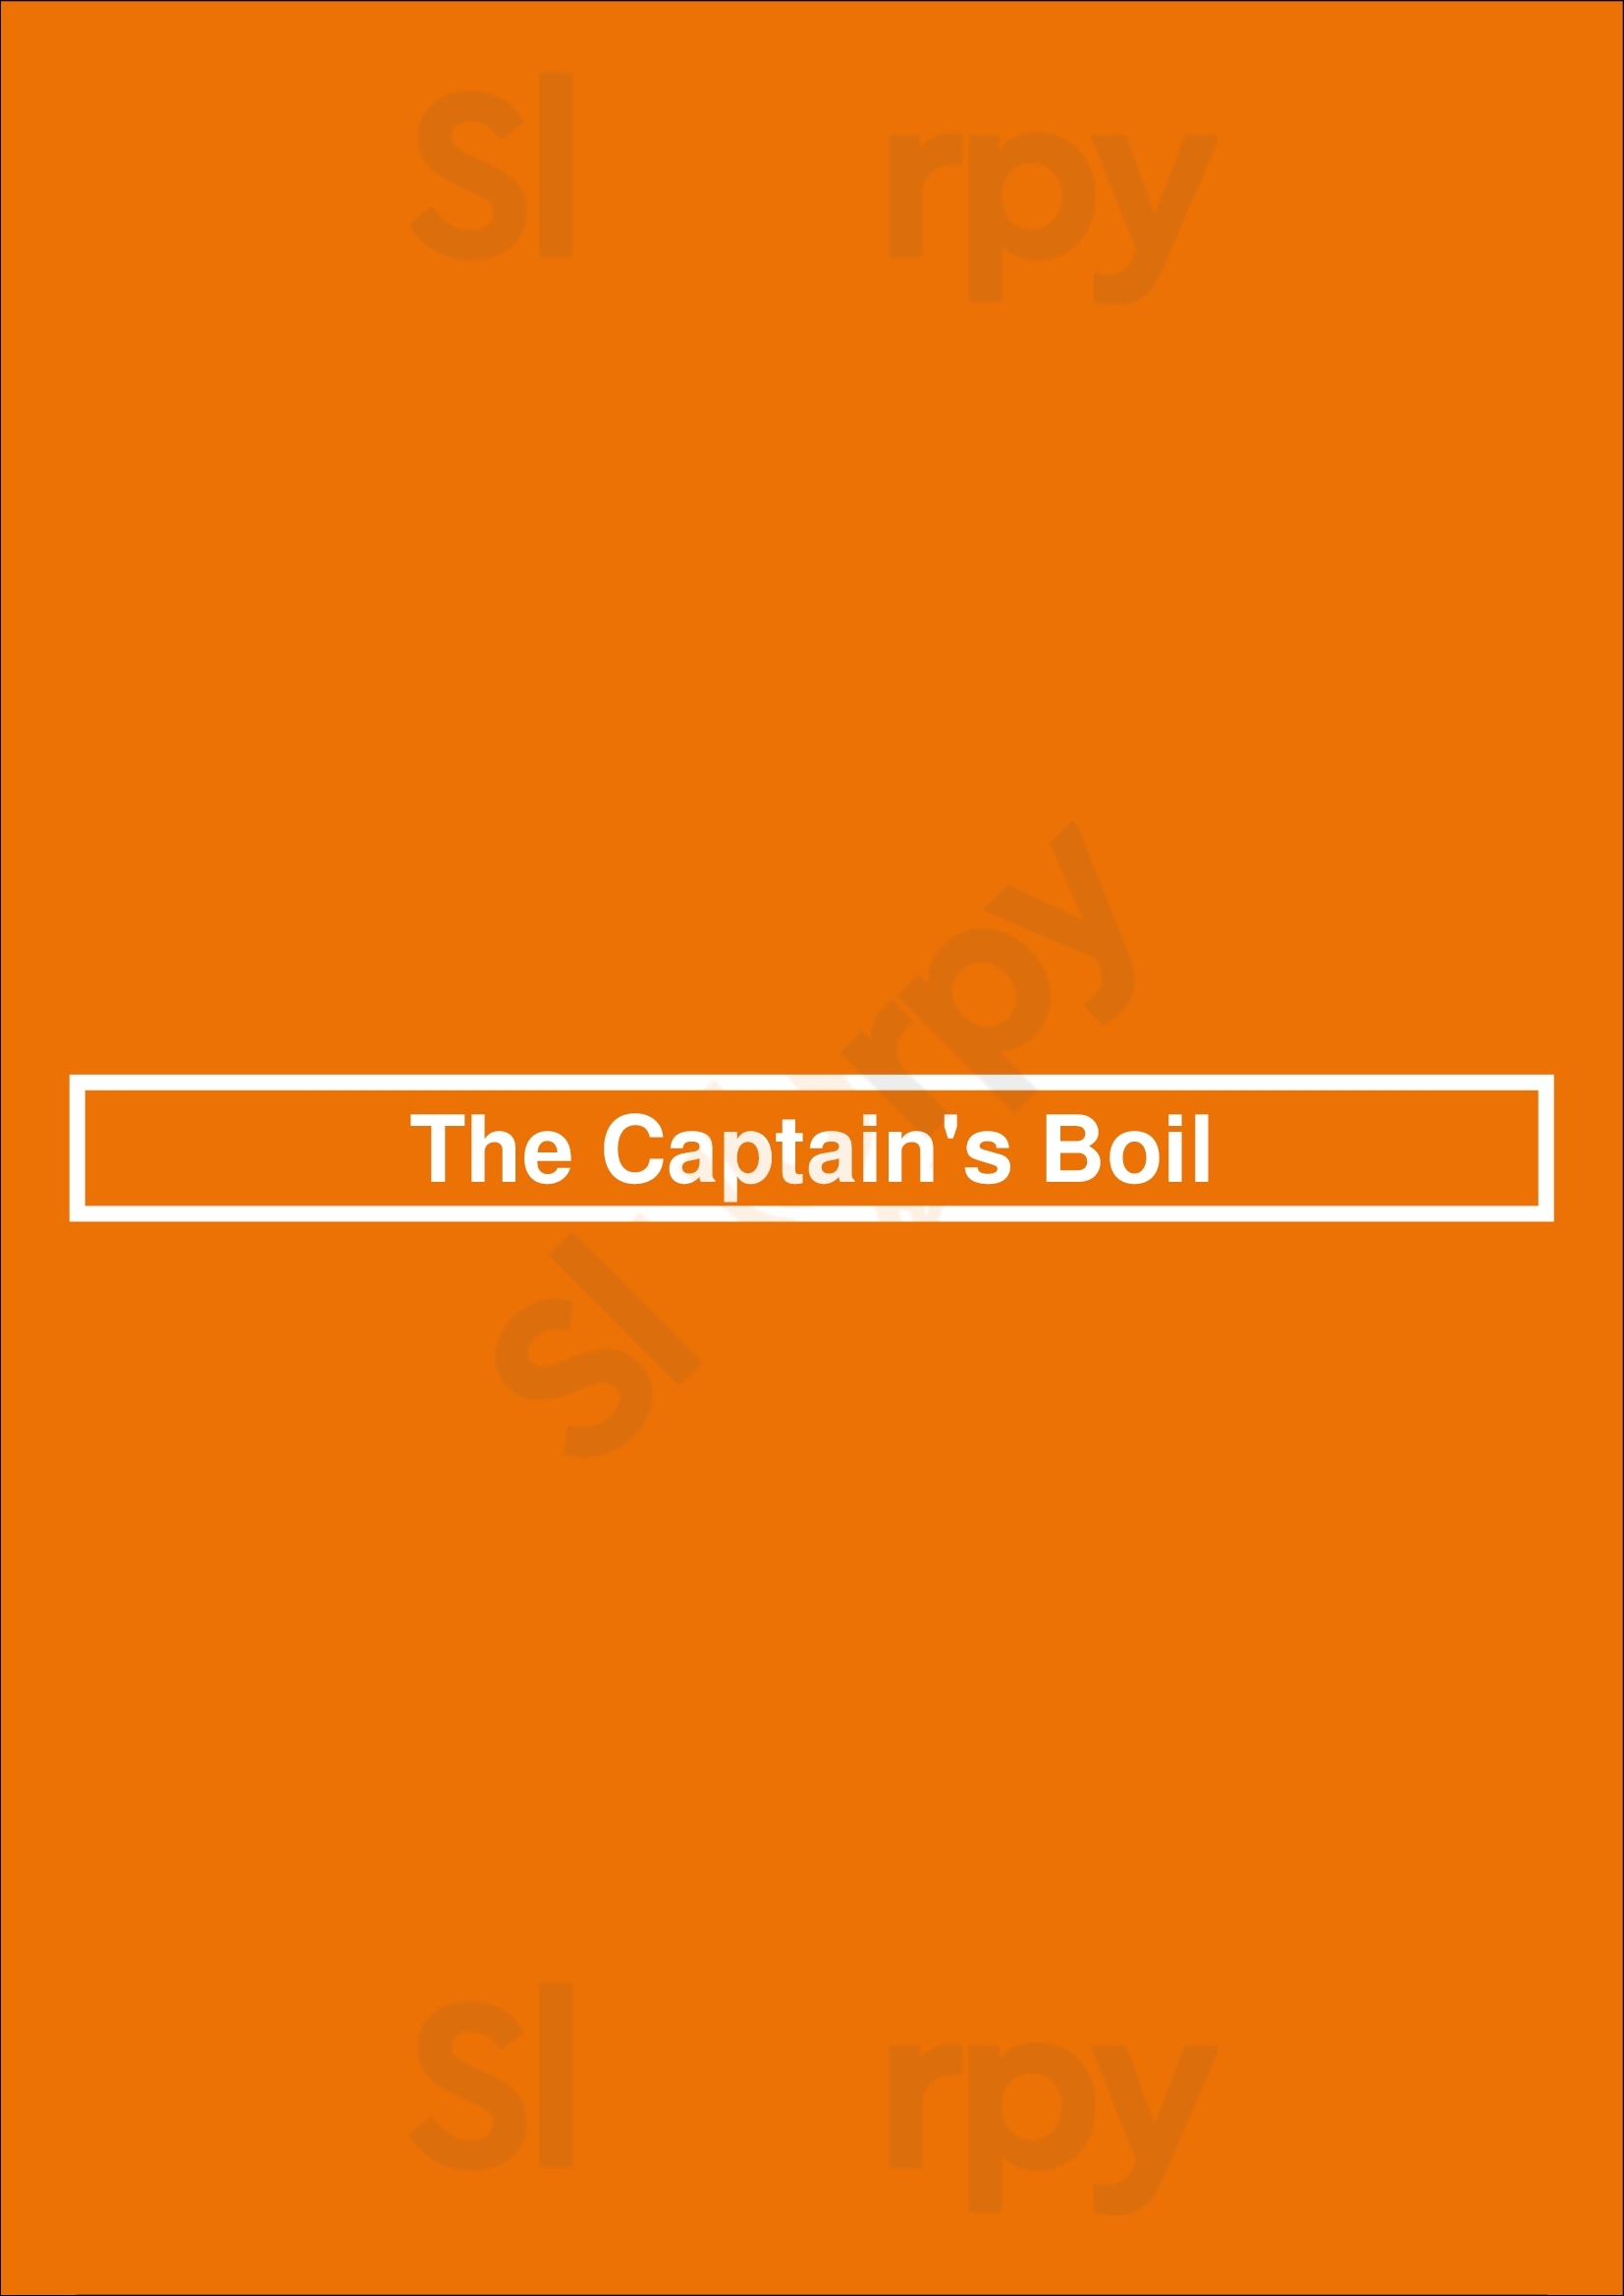 The Captain's Boil Toronto Menu - 1